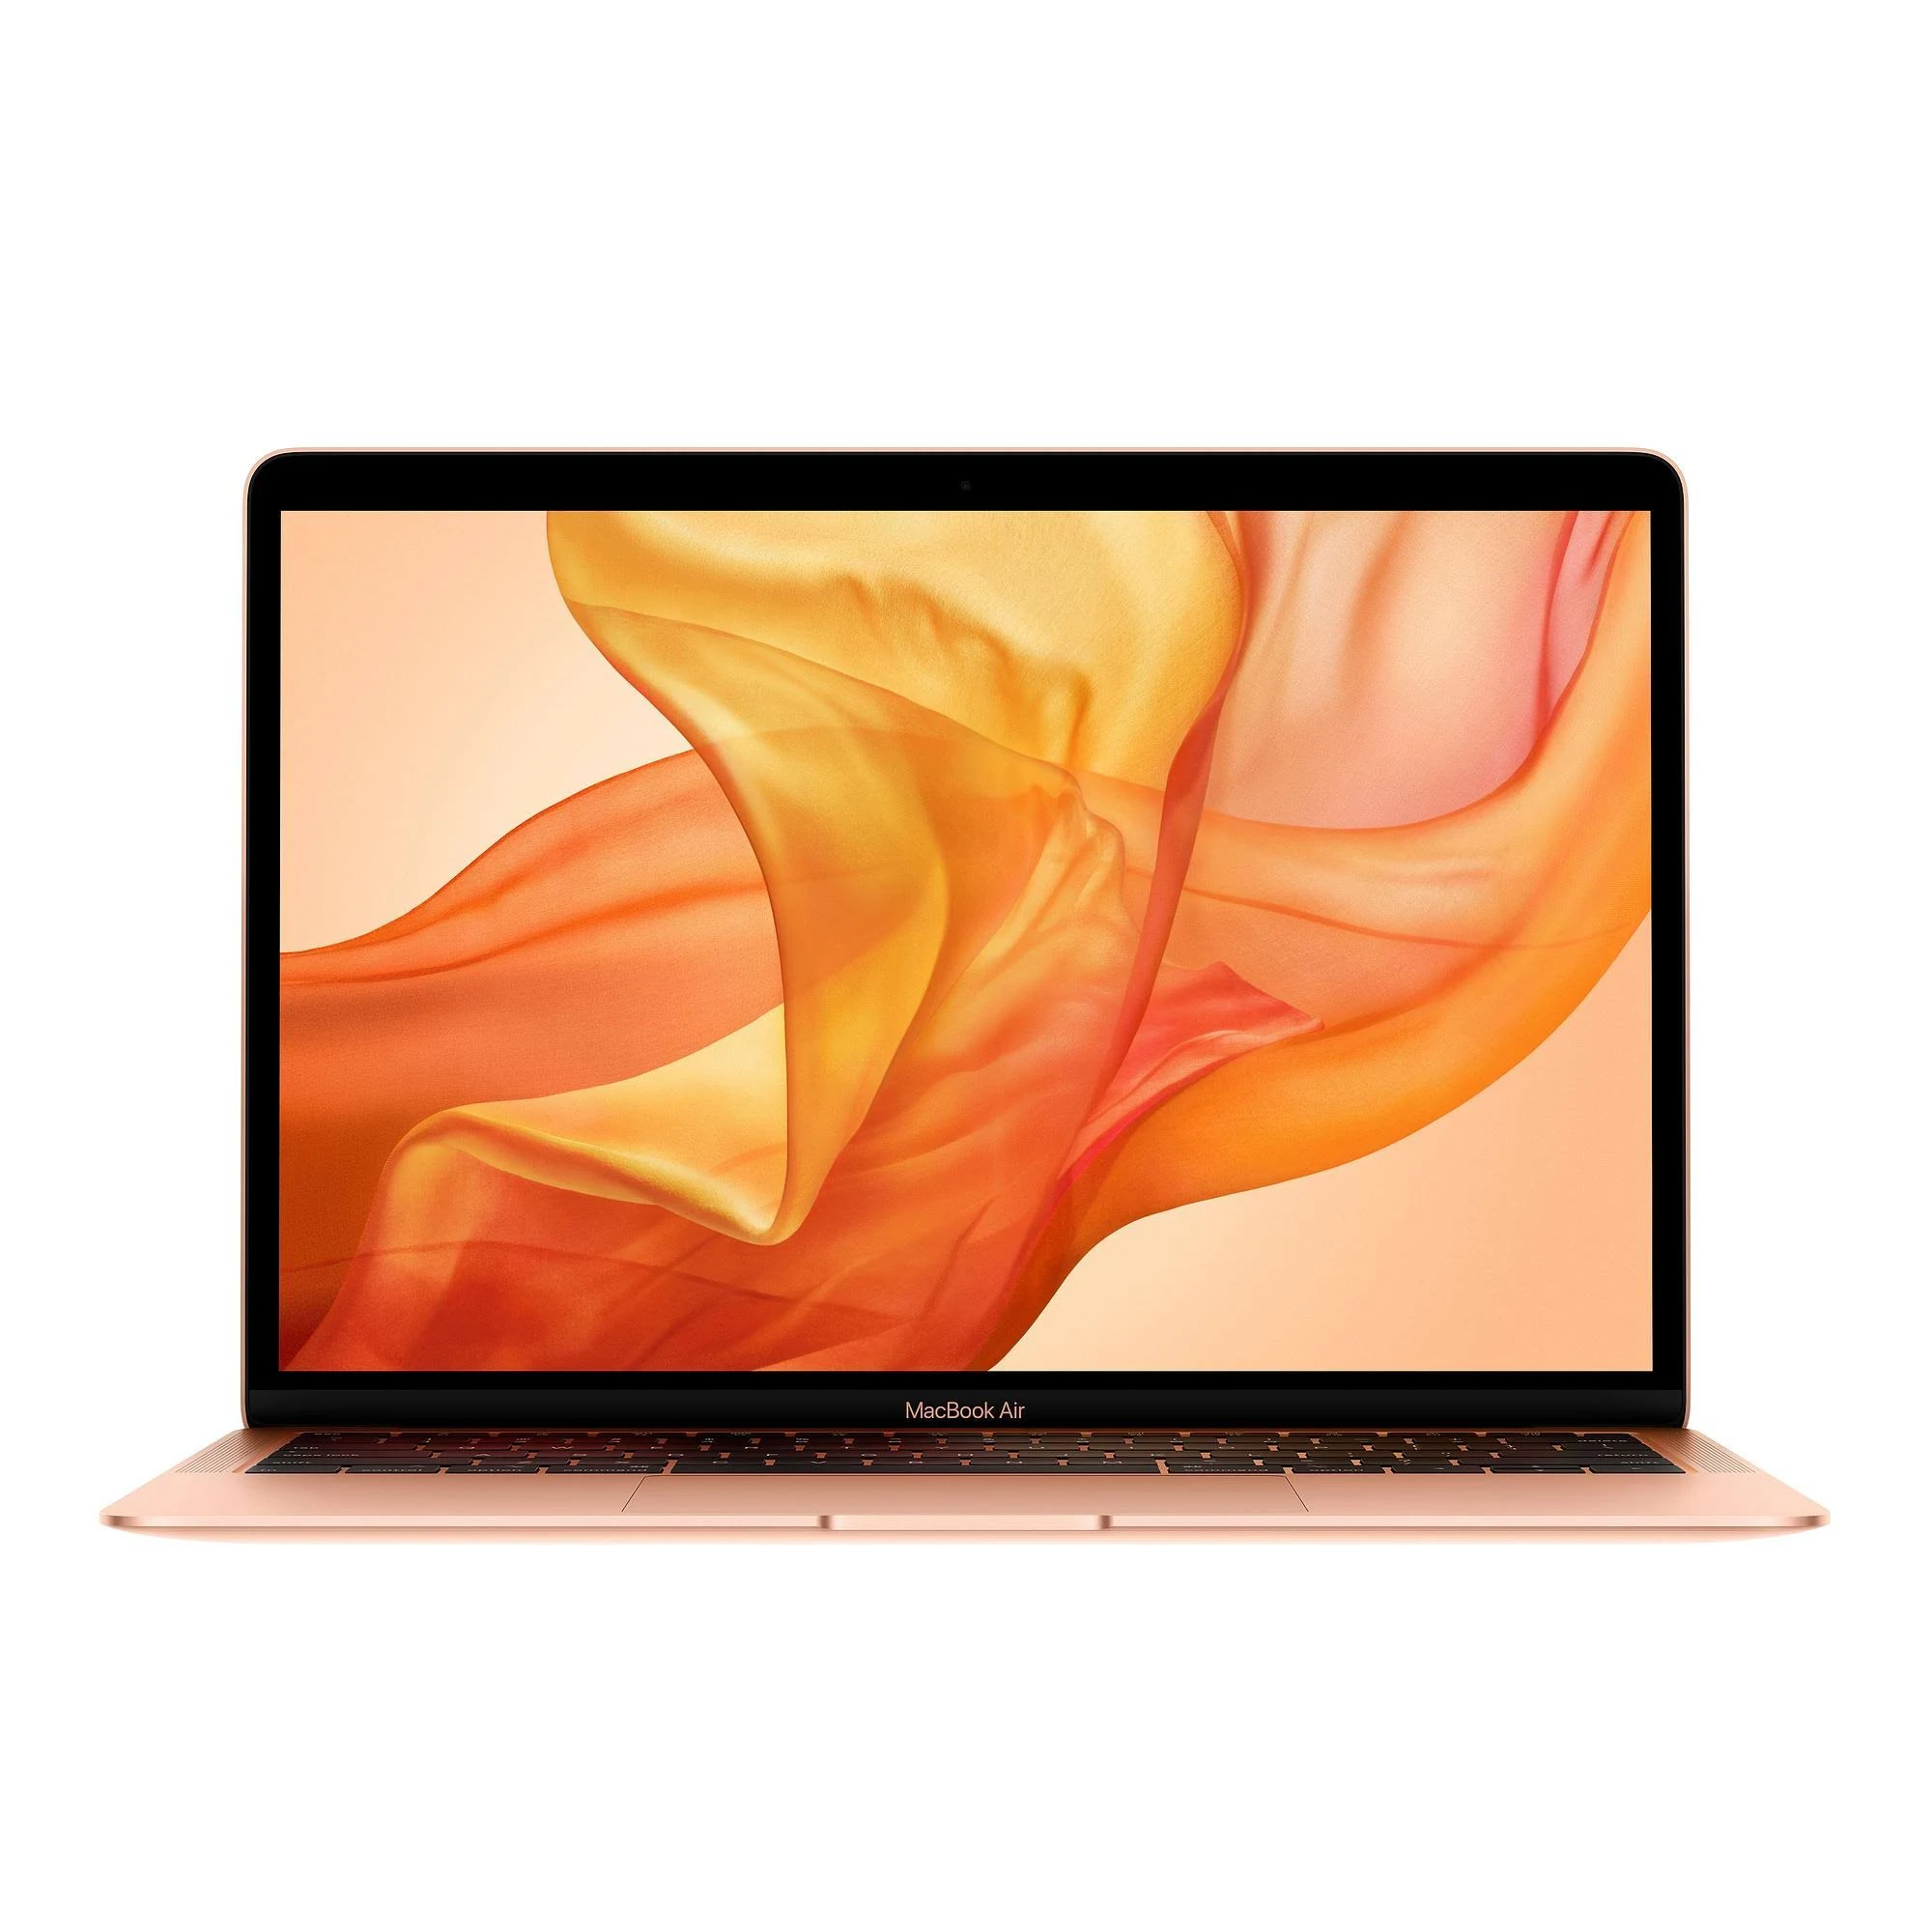 MacBook Air 13 inch True Tone 2019 i5 1.6GHz - 256GB SSD - 8GB Ram 256GB Gold Fair